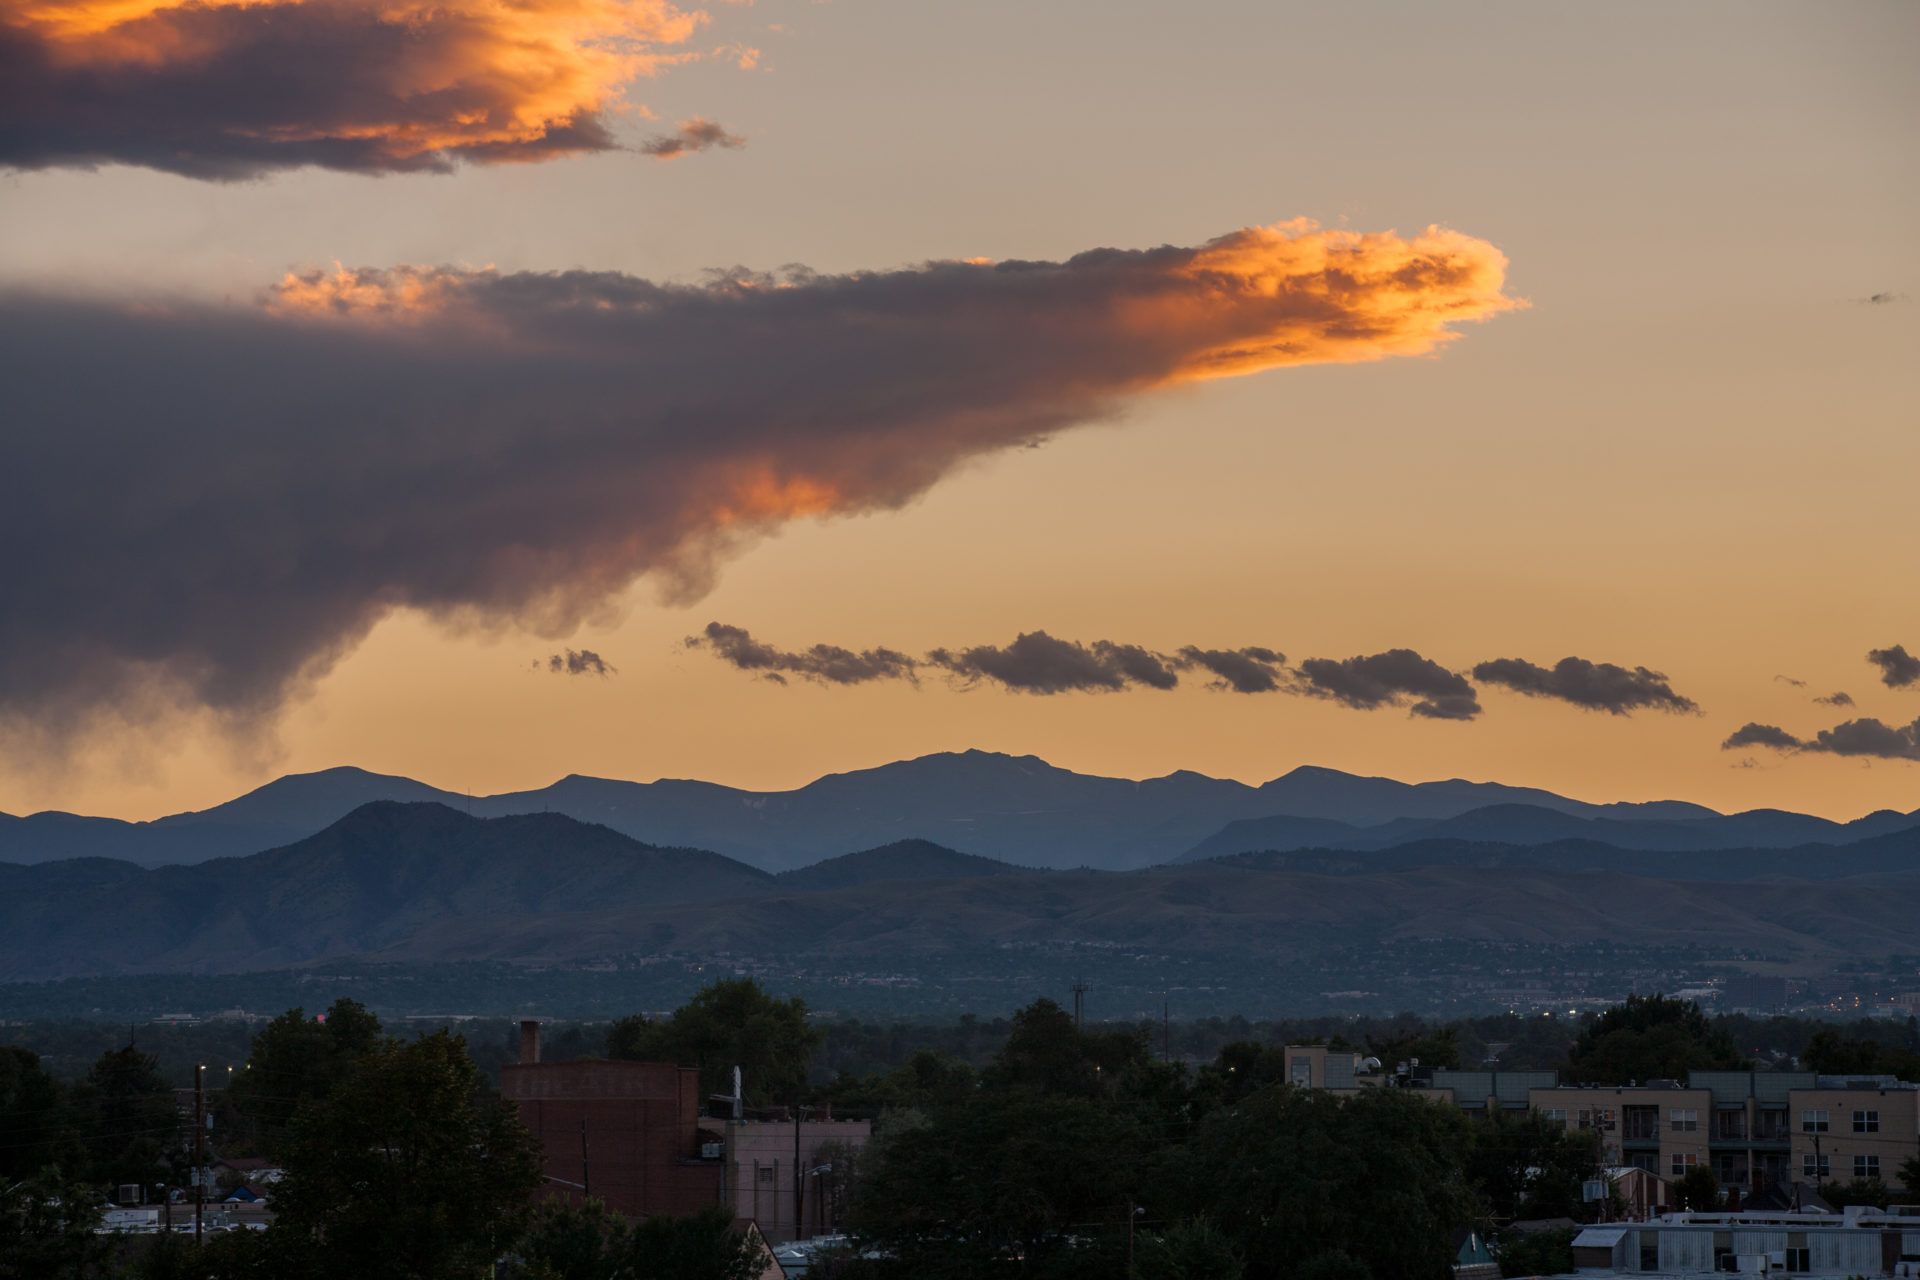 Mount Evans sunset - August 11, 2011